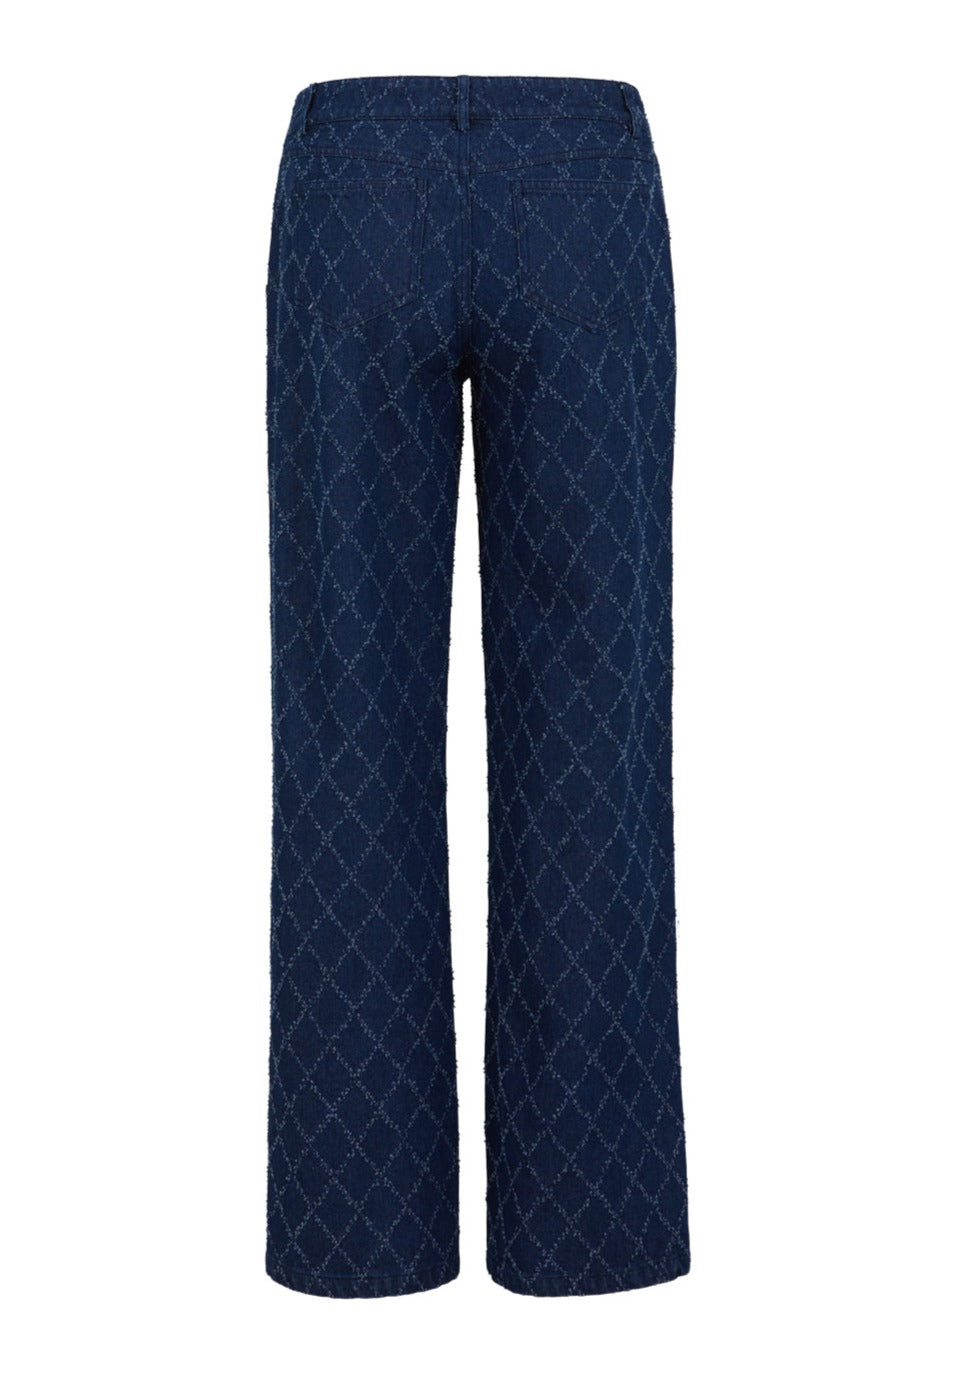 Coster Copenhagen - Pants with structure - Petra fit - Blue denim